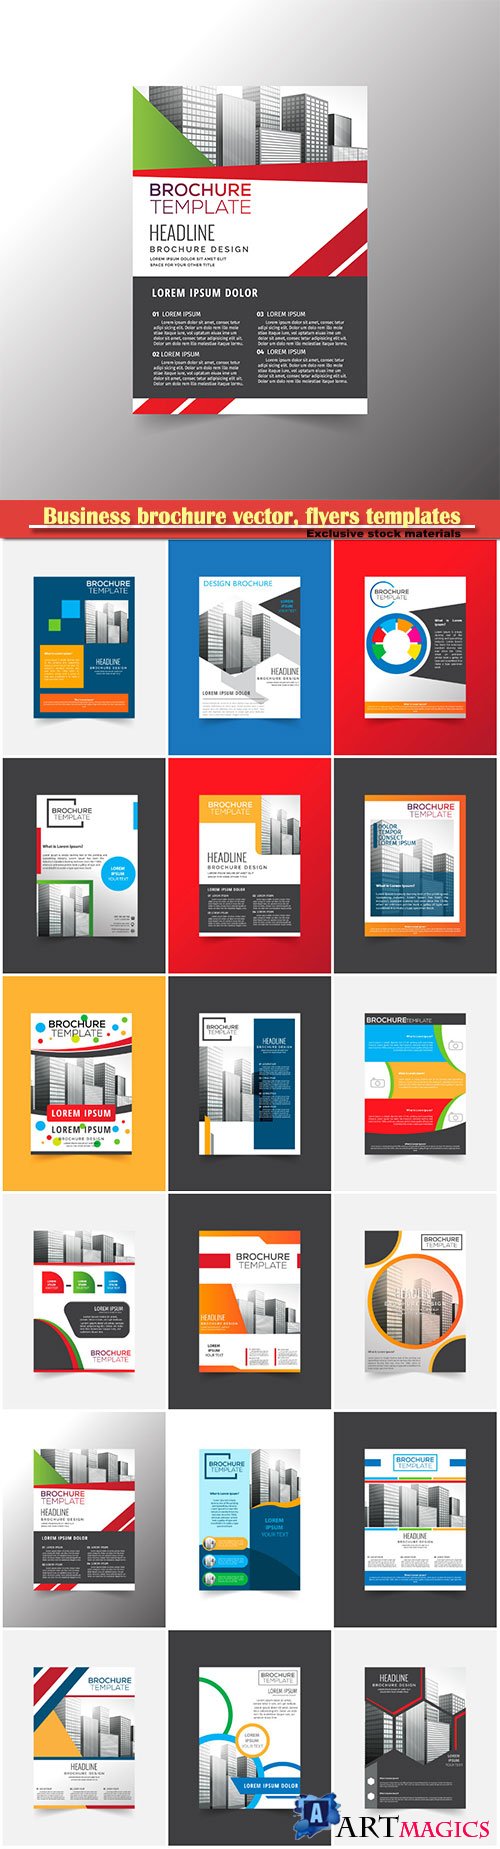 Business brochure vector, flyers templates, report cover design # 97